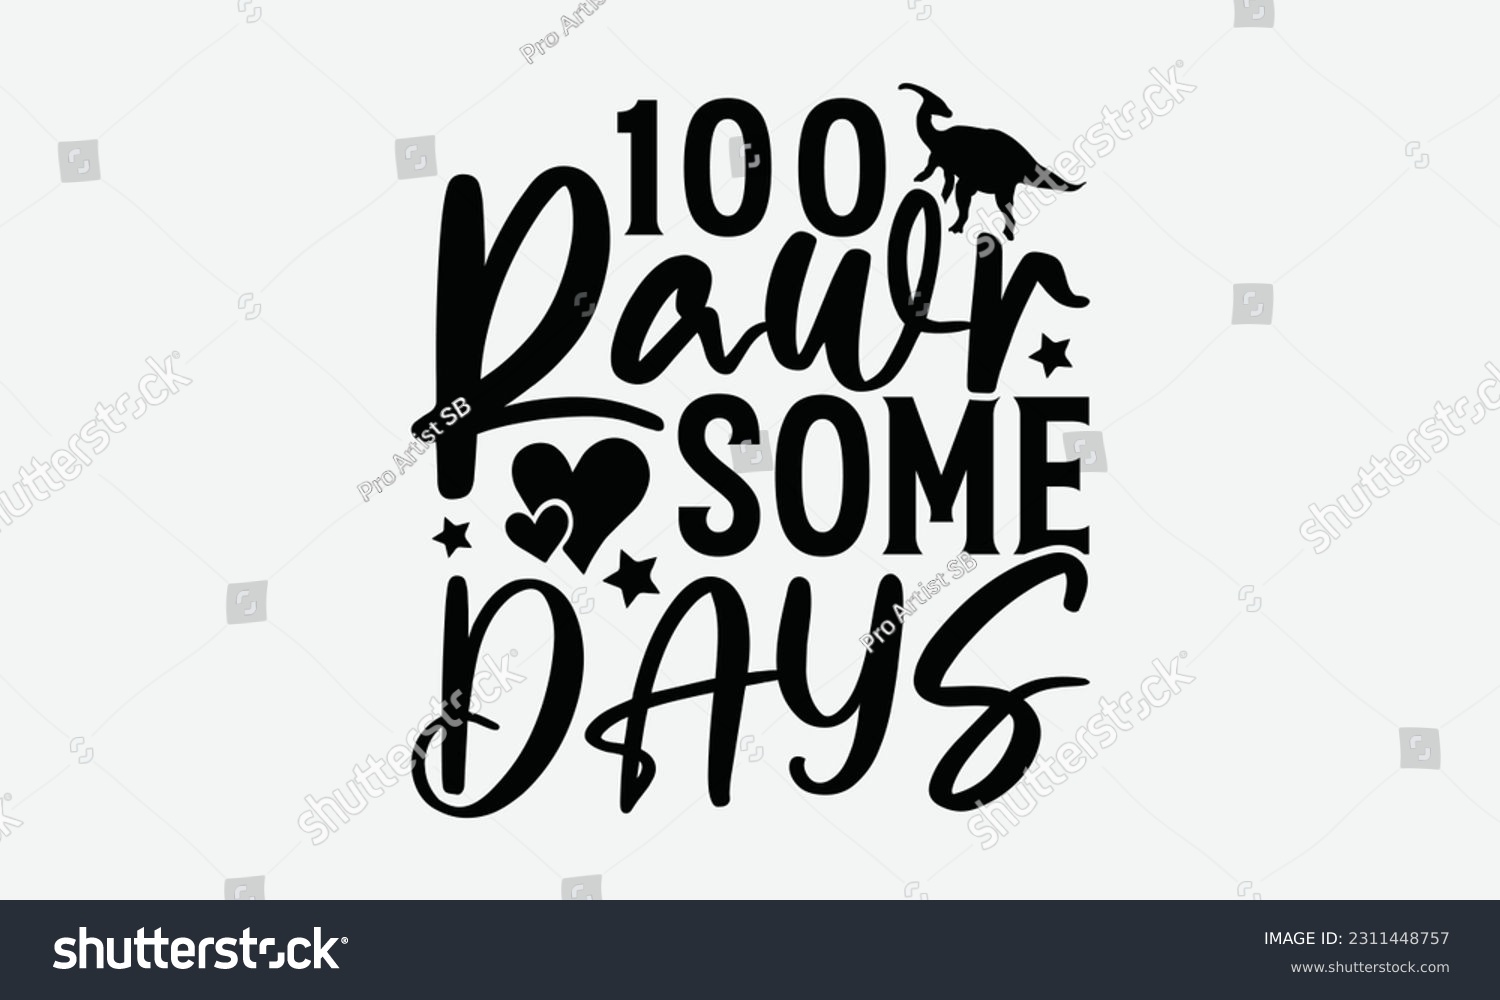 SVG of 100 Rawr Some Days - Dinosaur SVG Design, Motivational Inspirational T-shirt Quotes, Hand Drawn Vintage Illustration With Hand-Lettering And Decoration Elements. svg